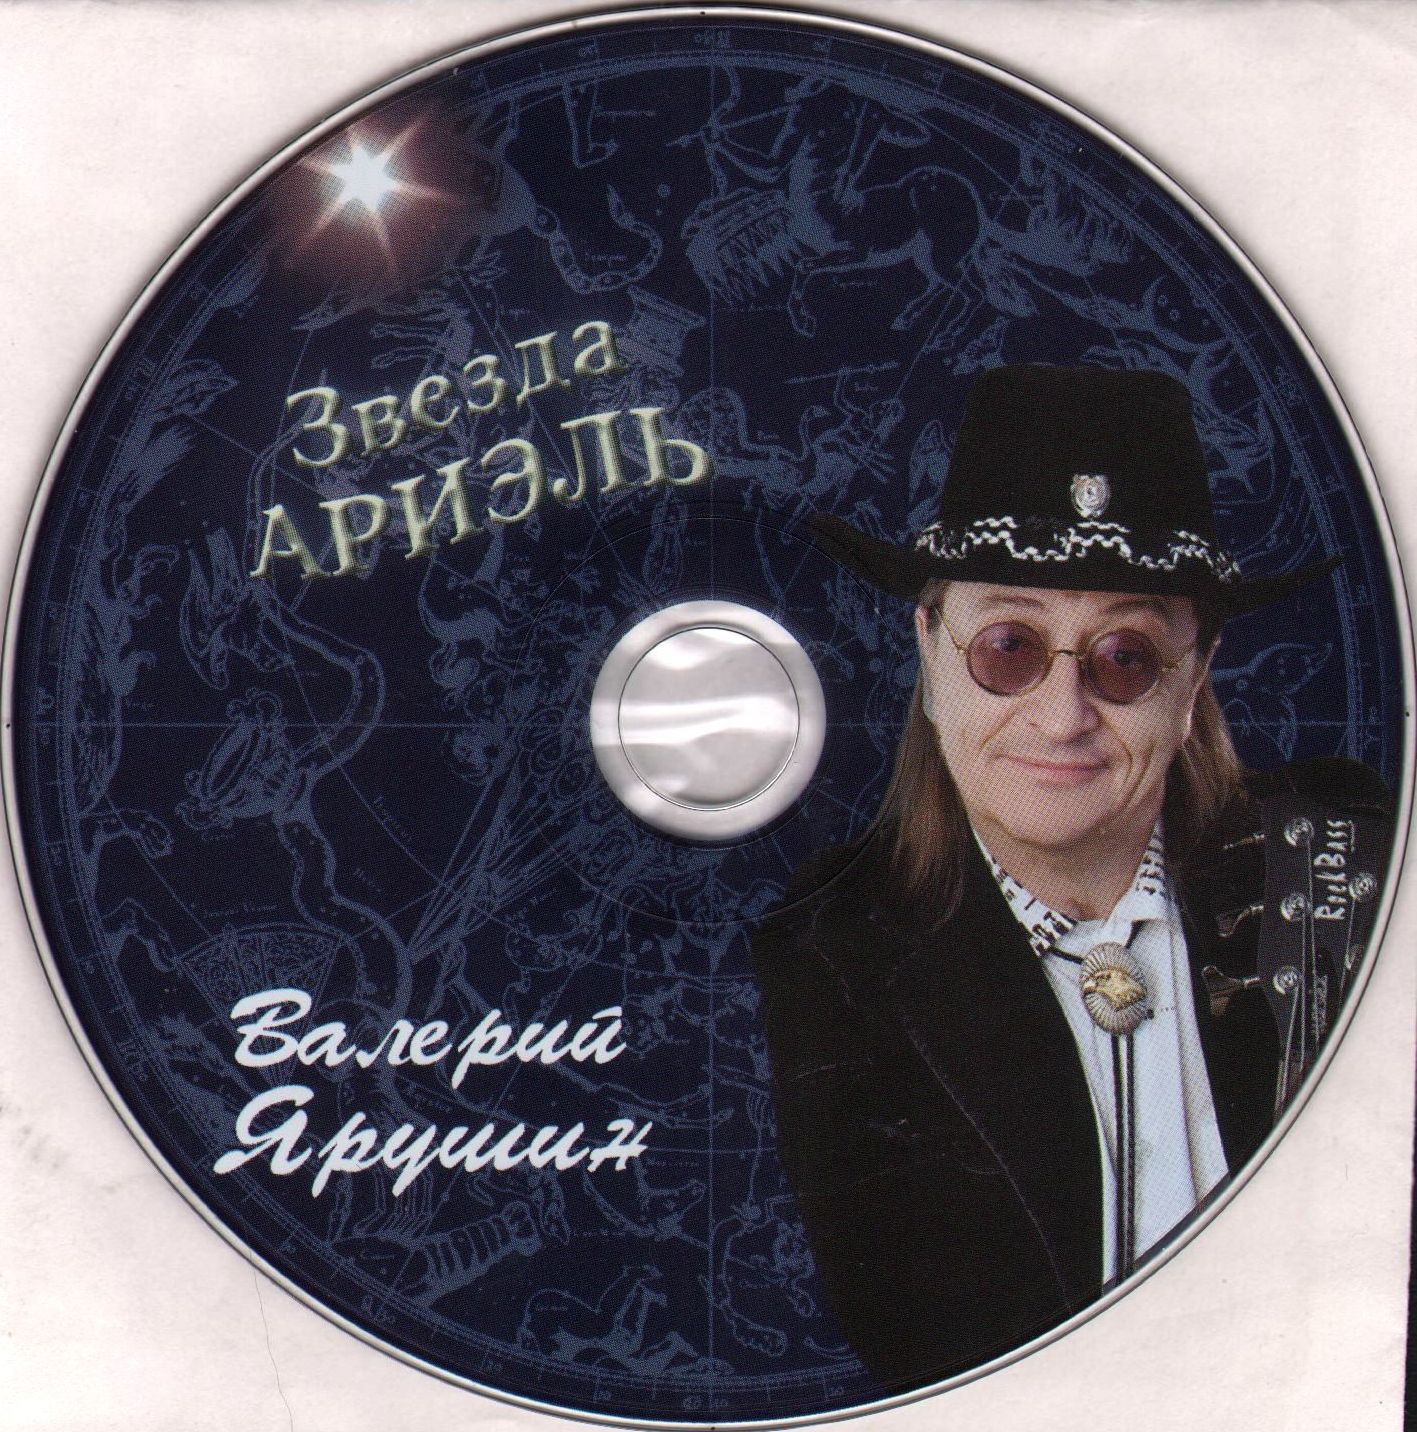 Валерий Ярушин ~ (2009) Звезда Ариэль